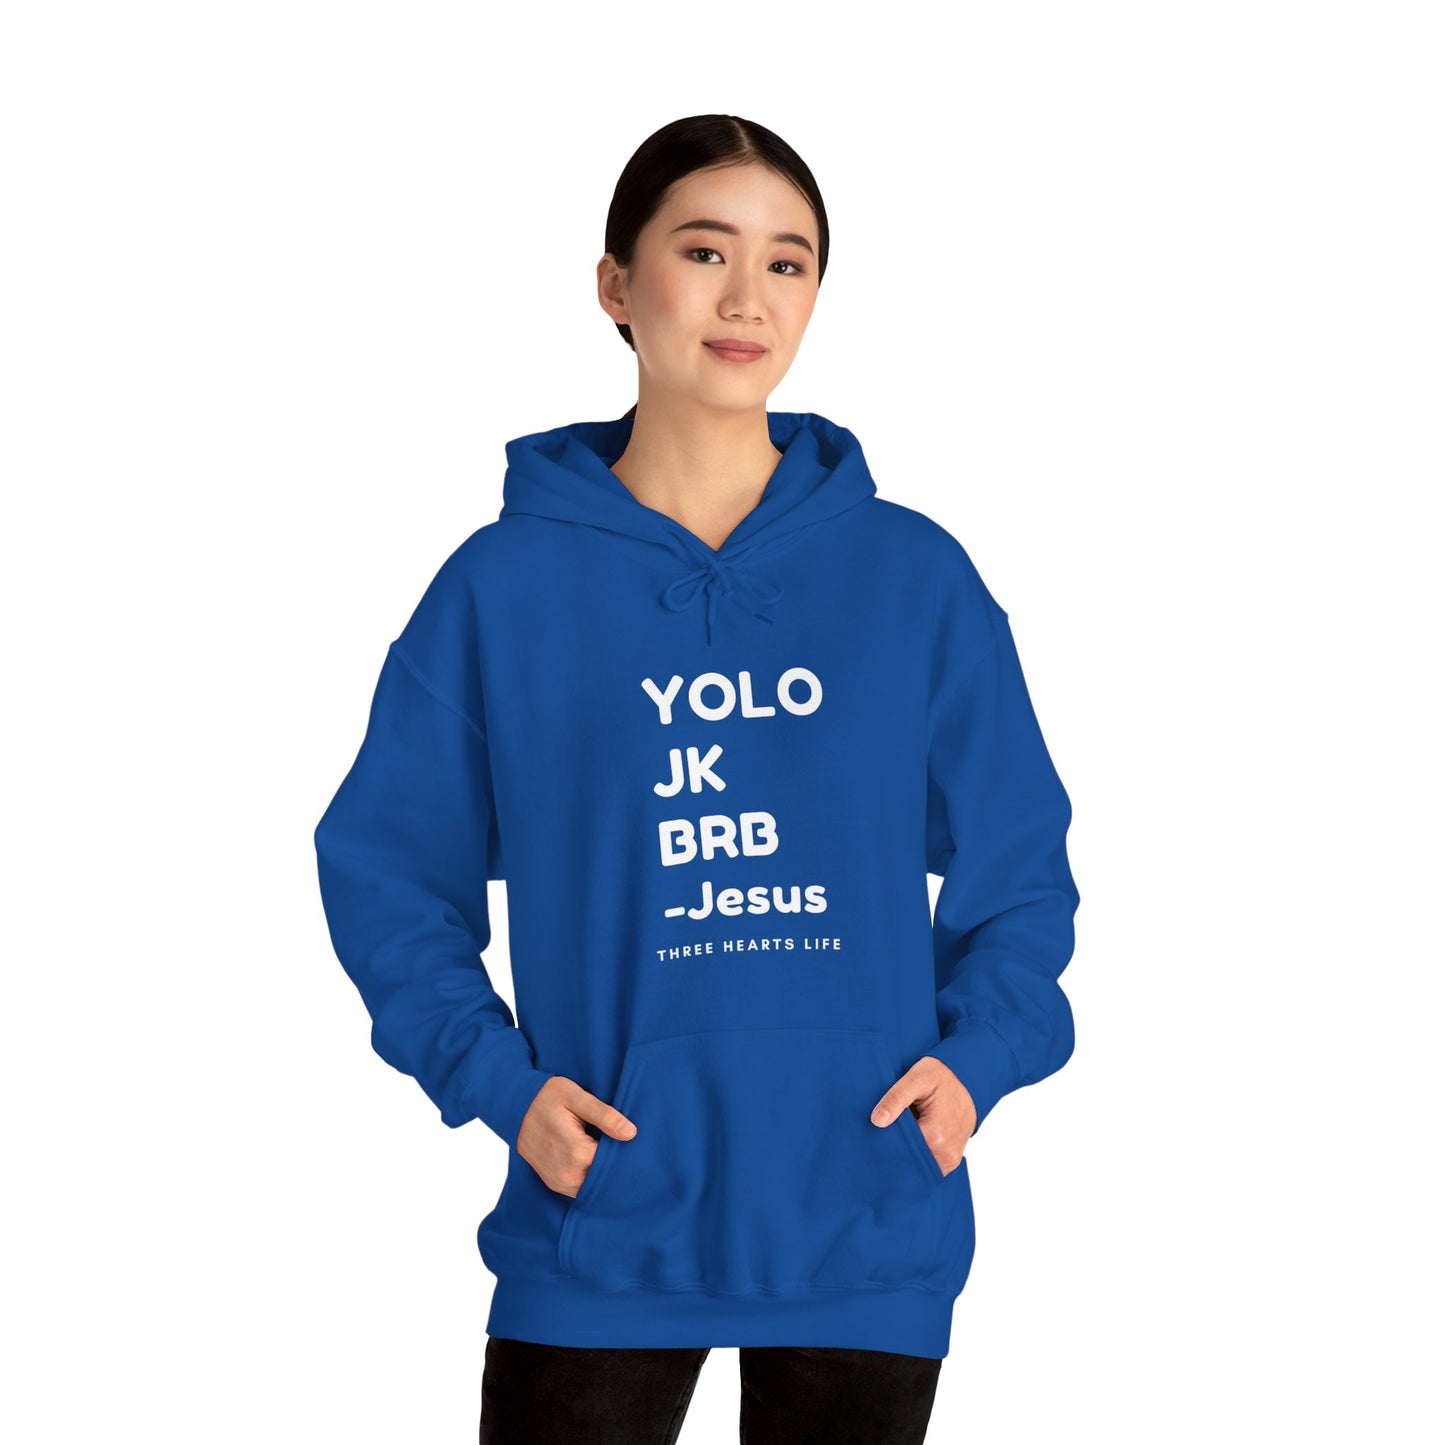 YOLO Hooded Sweatshirt - Bright Colors